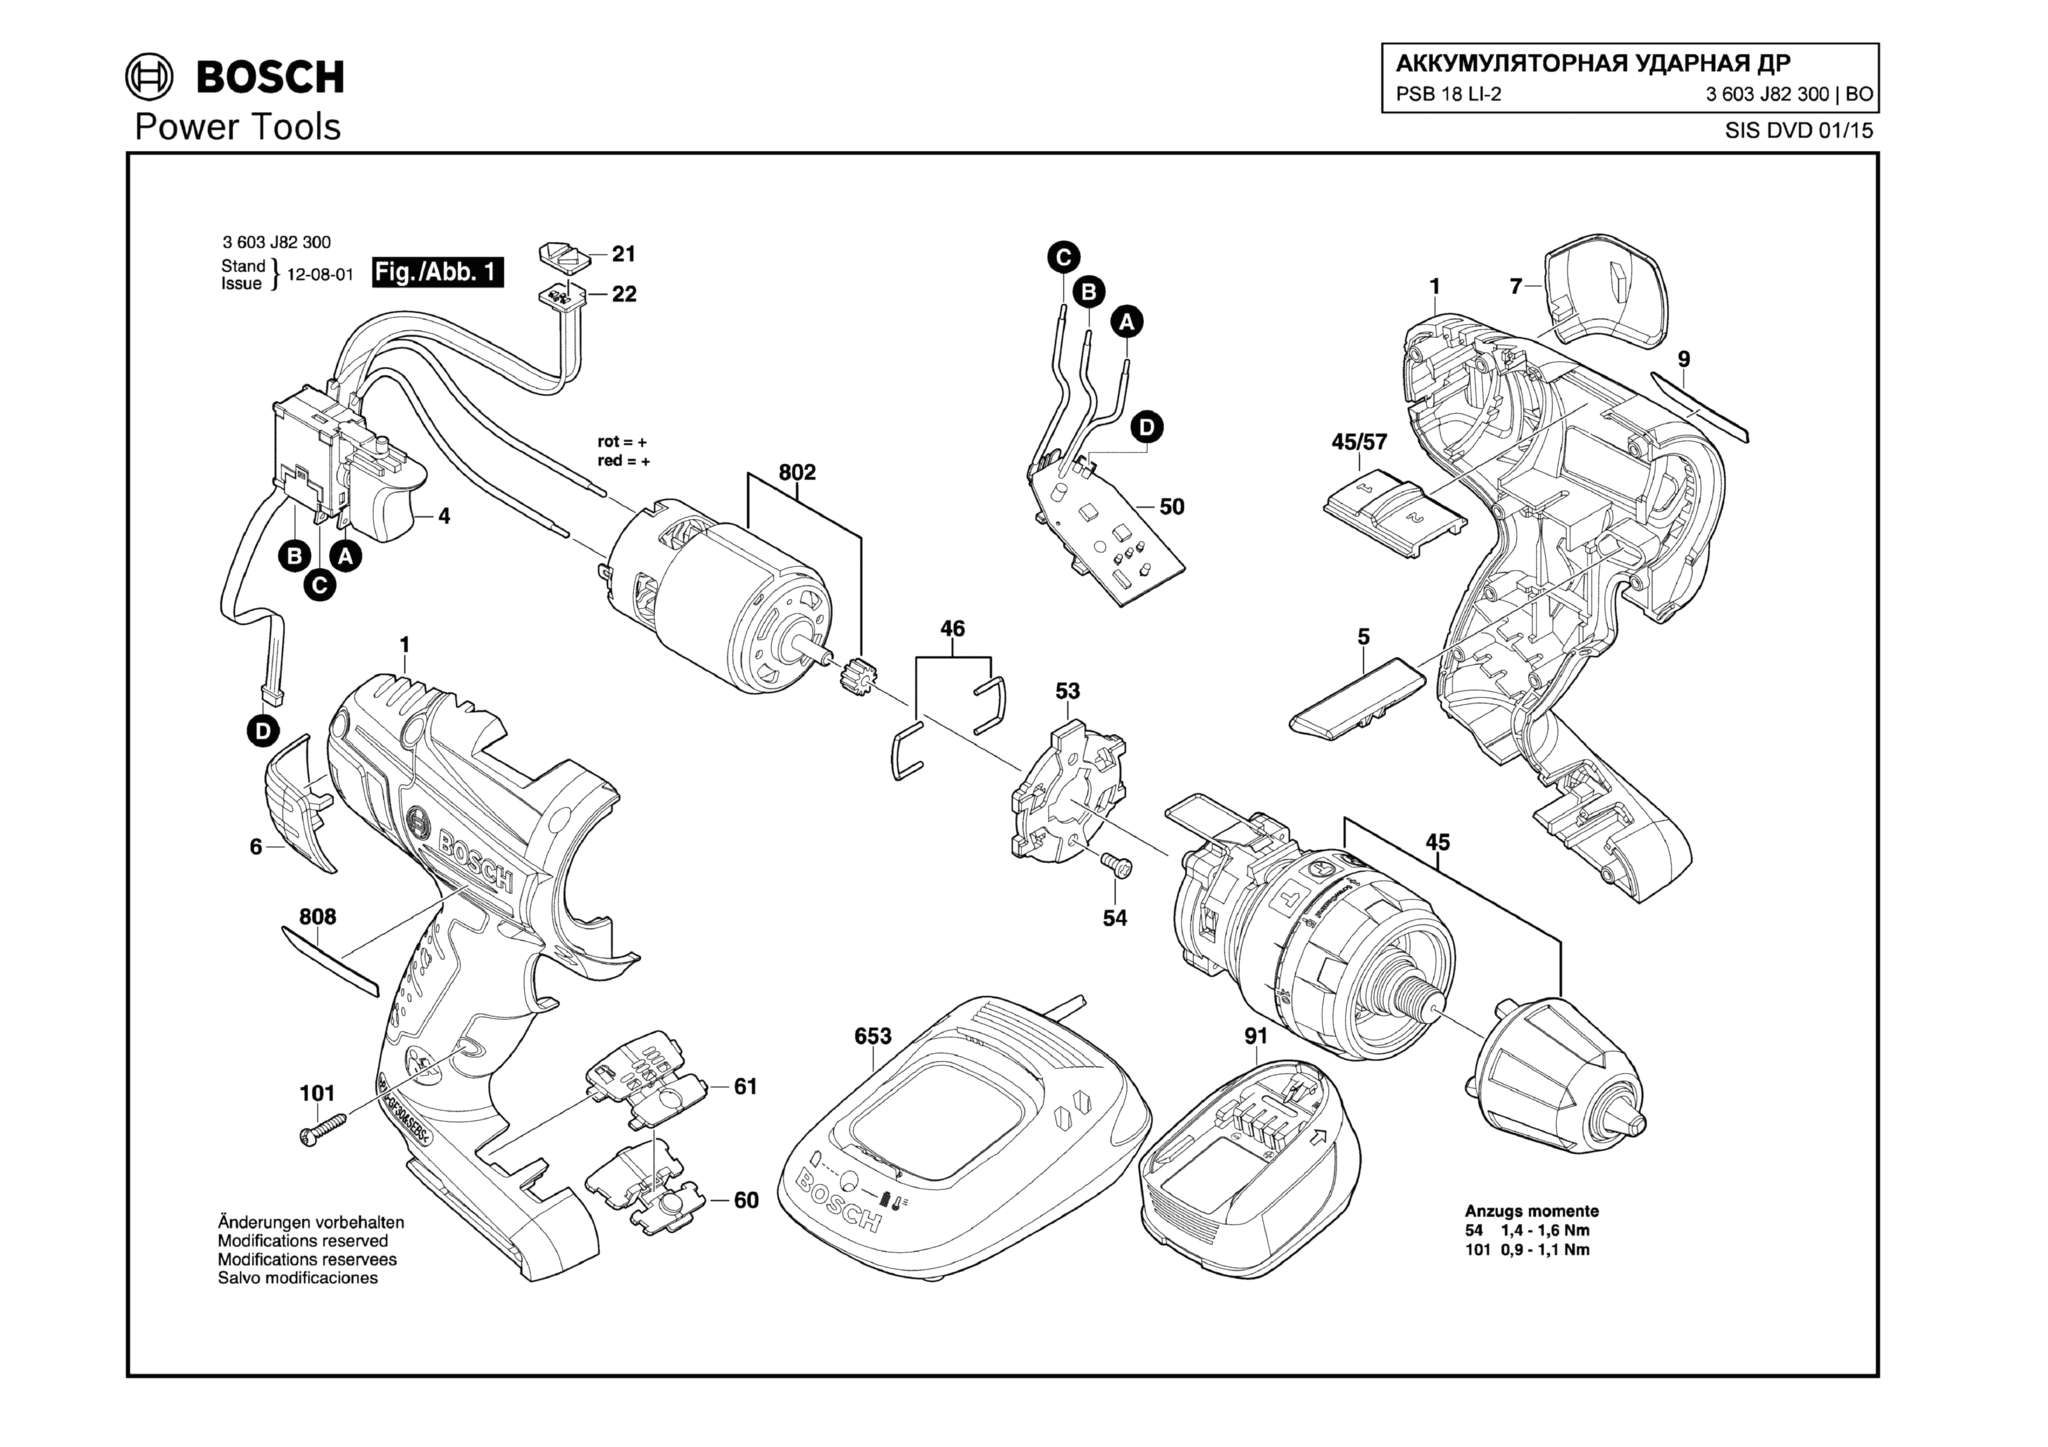 Запчасти, схема и деталировка Bosch PSB 18 LI-2 (ТИП 3603J82300)